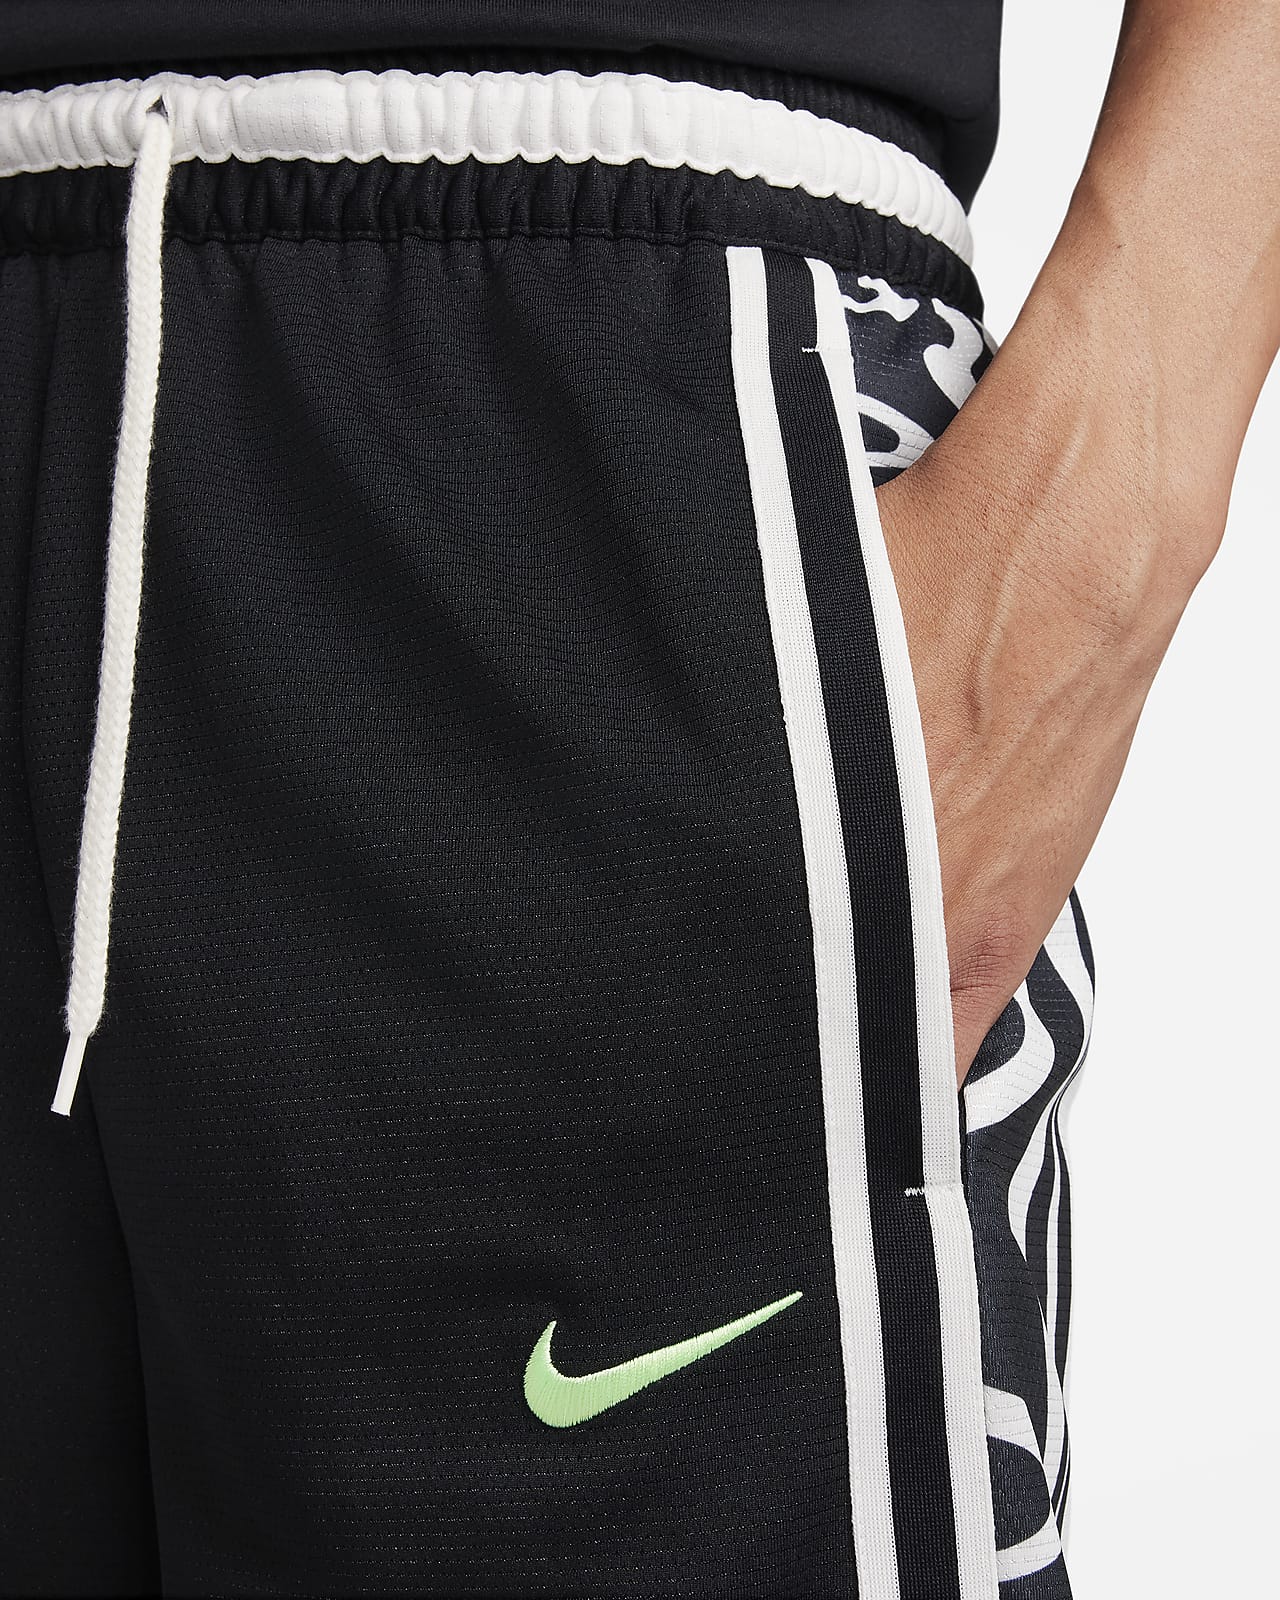 Nike Dri-FIT DNA Men's 20cm (approx.) Basketball Shorts